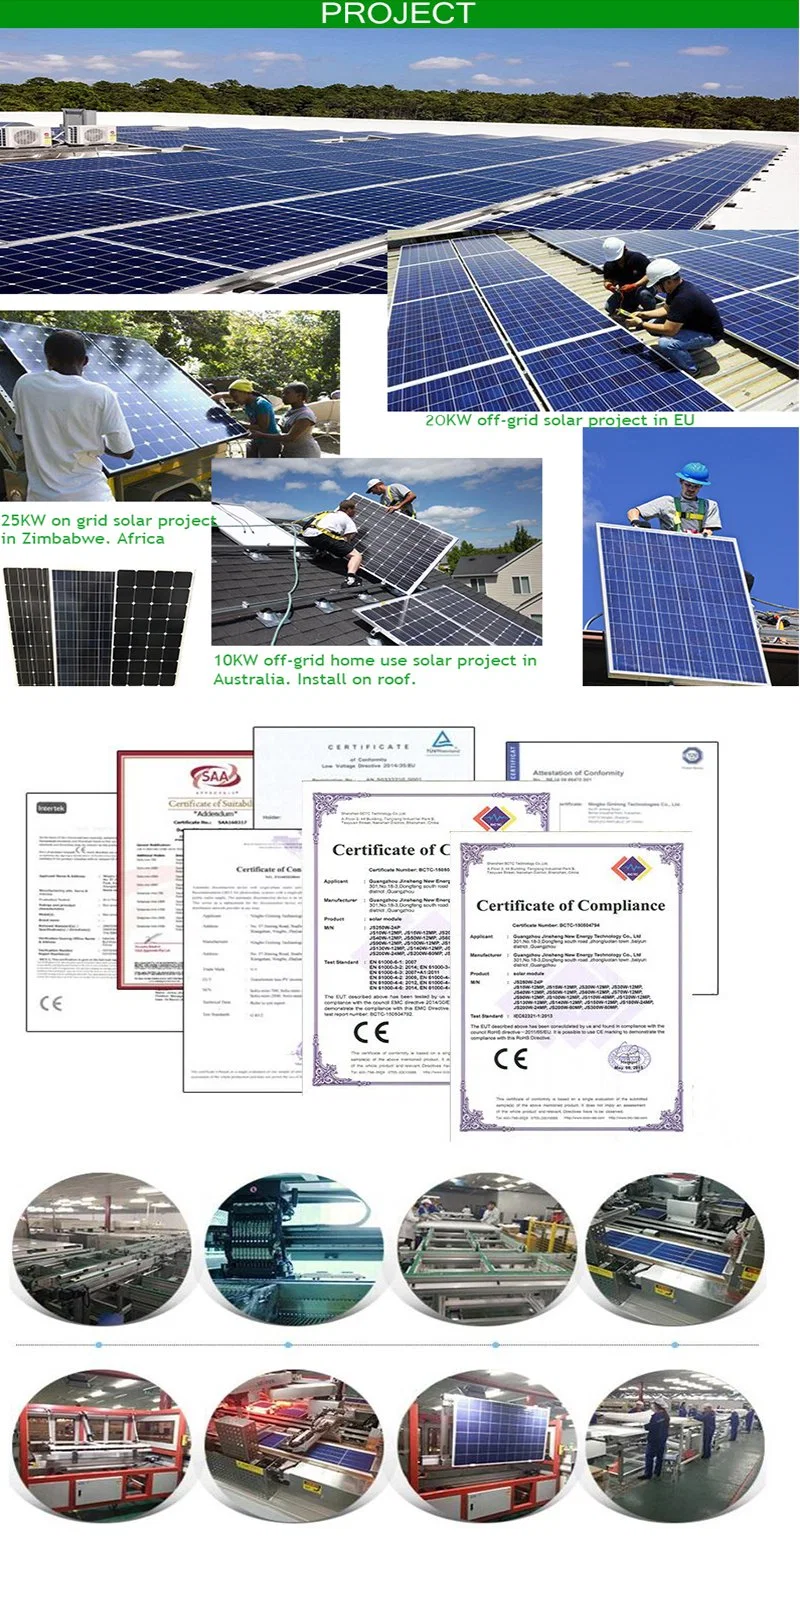 Kinsun 1-50kw Hybrid Solar Power System